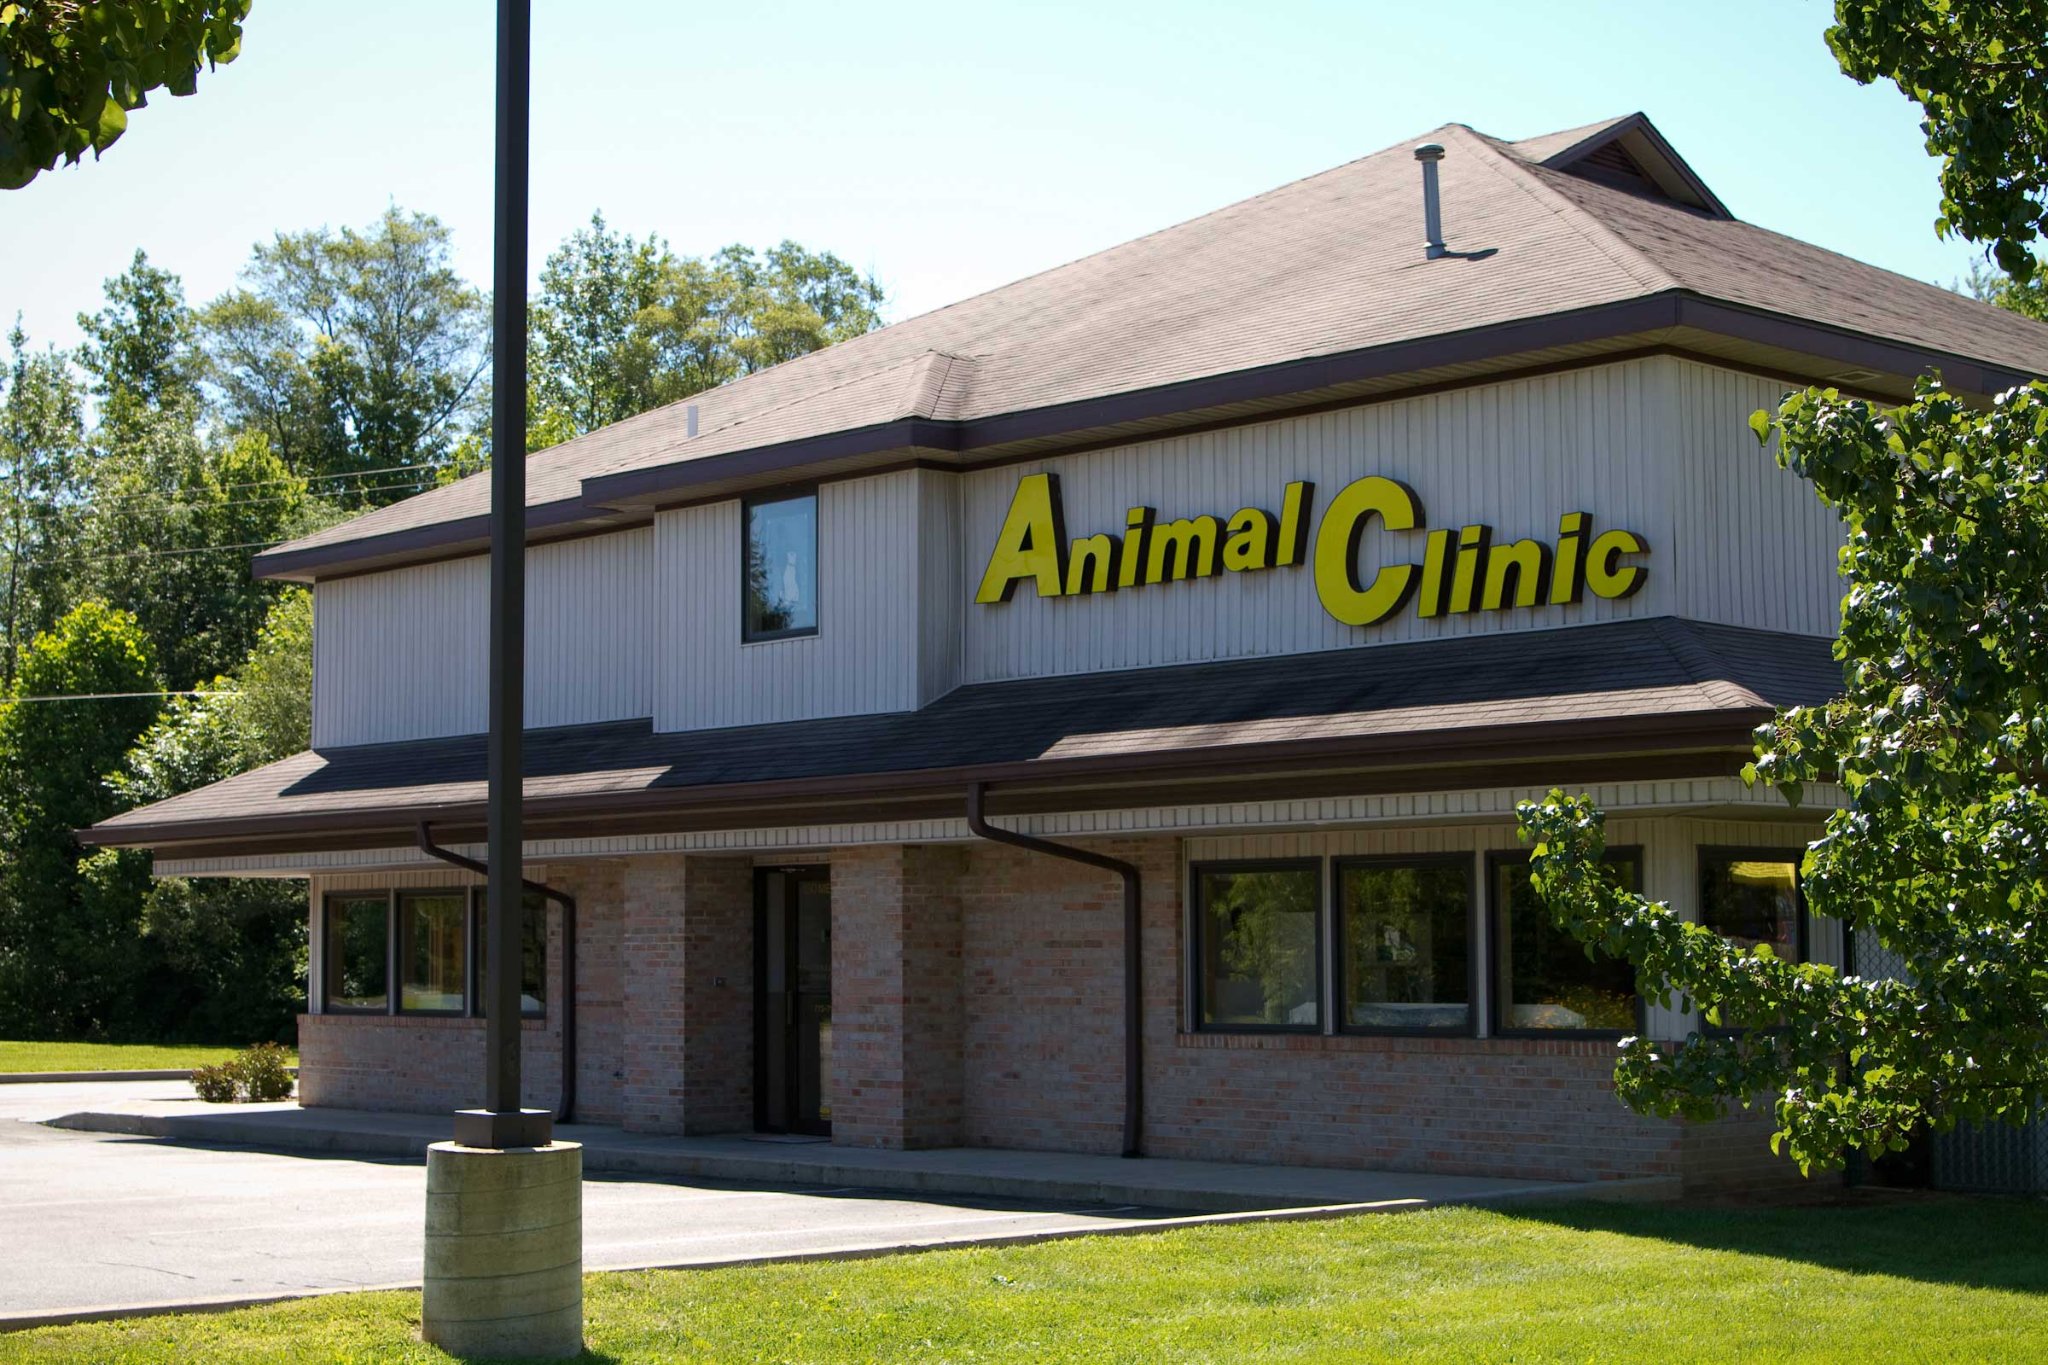 Noblesville Square Animal Clinic